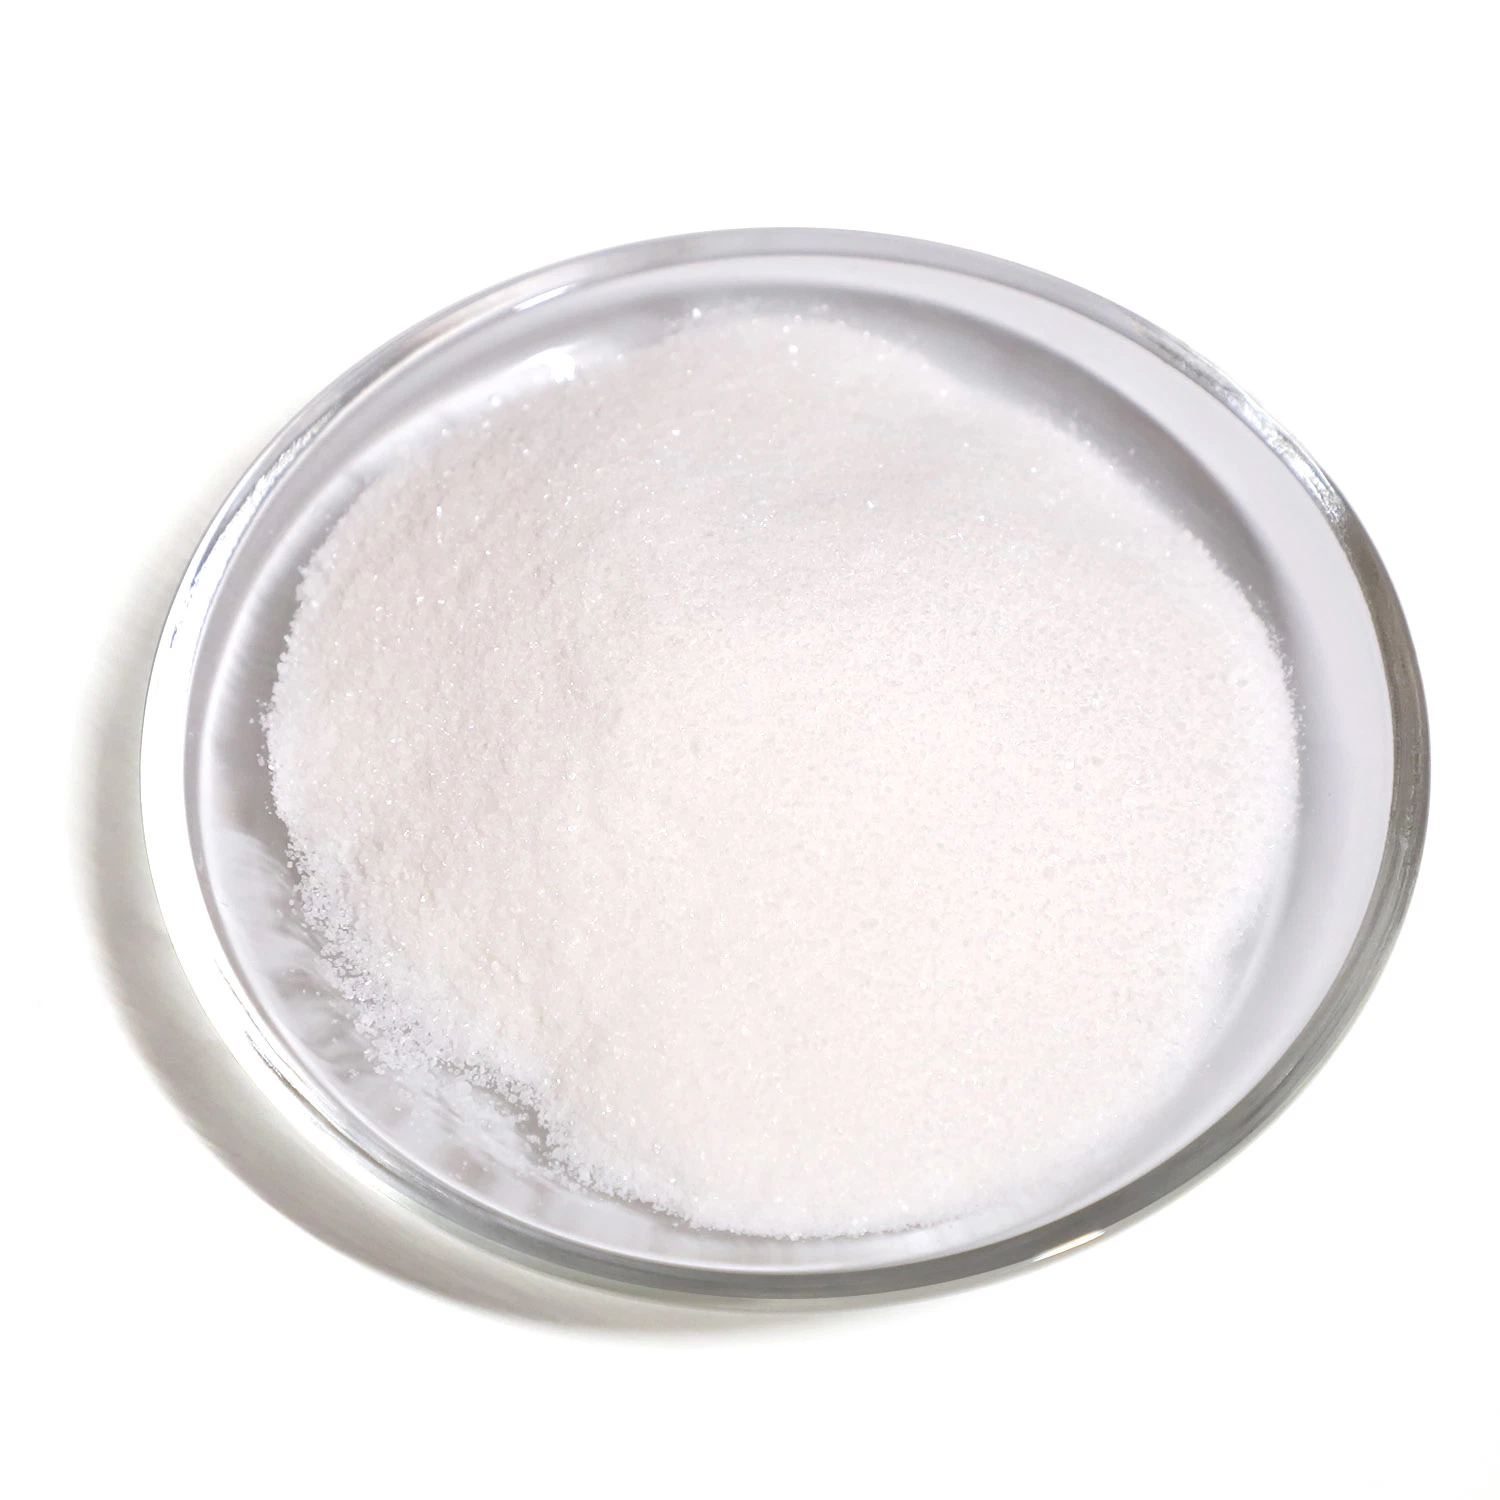 EDTA te de sodium de haute qualité avec EDTA CAS60-00-4 de pureté 99 %